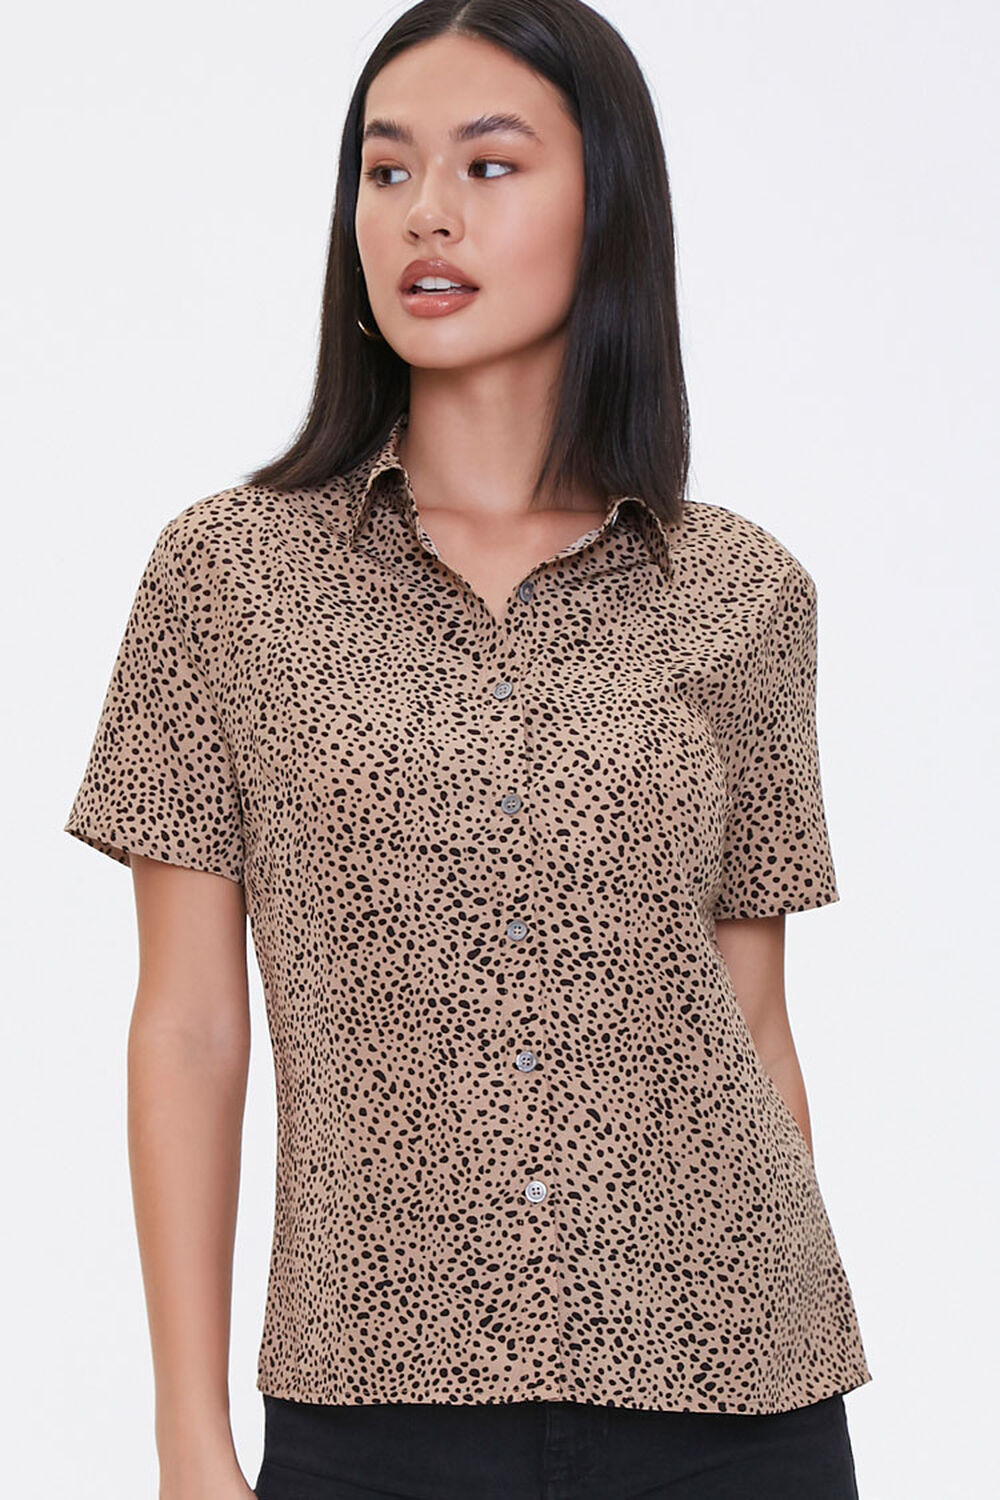 TAUPE/BLACK Cheetah Print Shirt, image 1